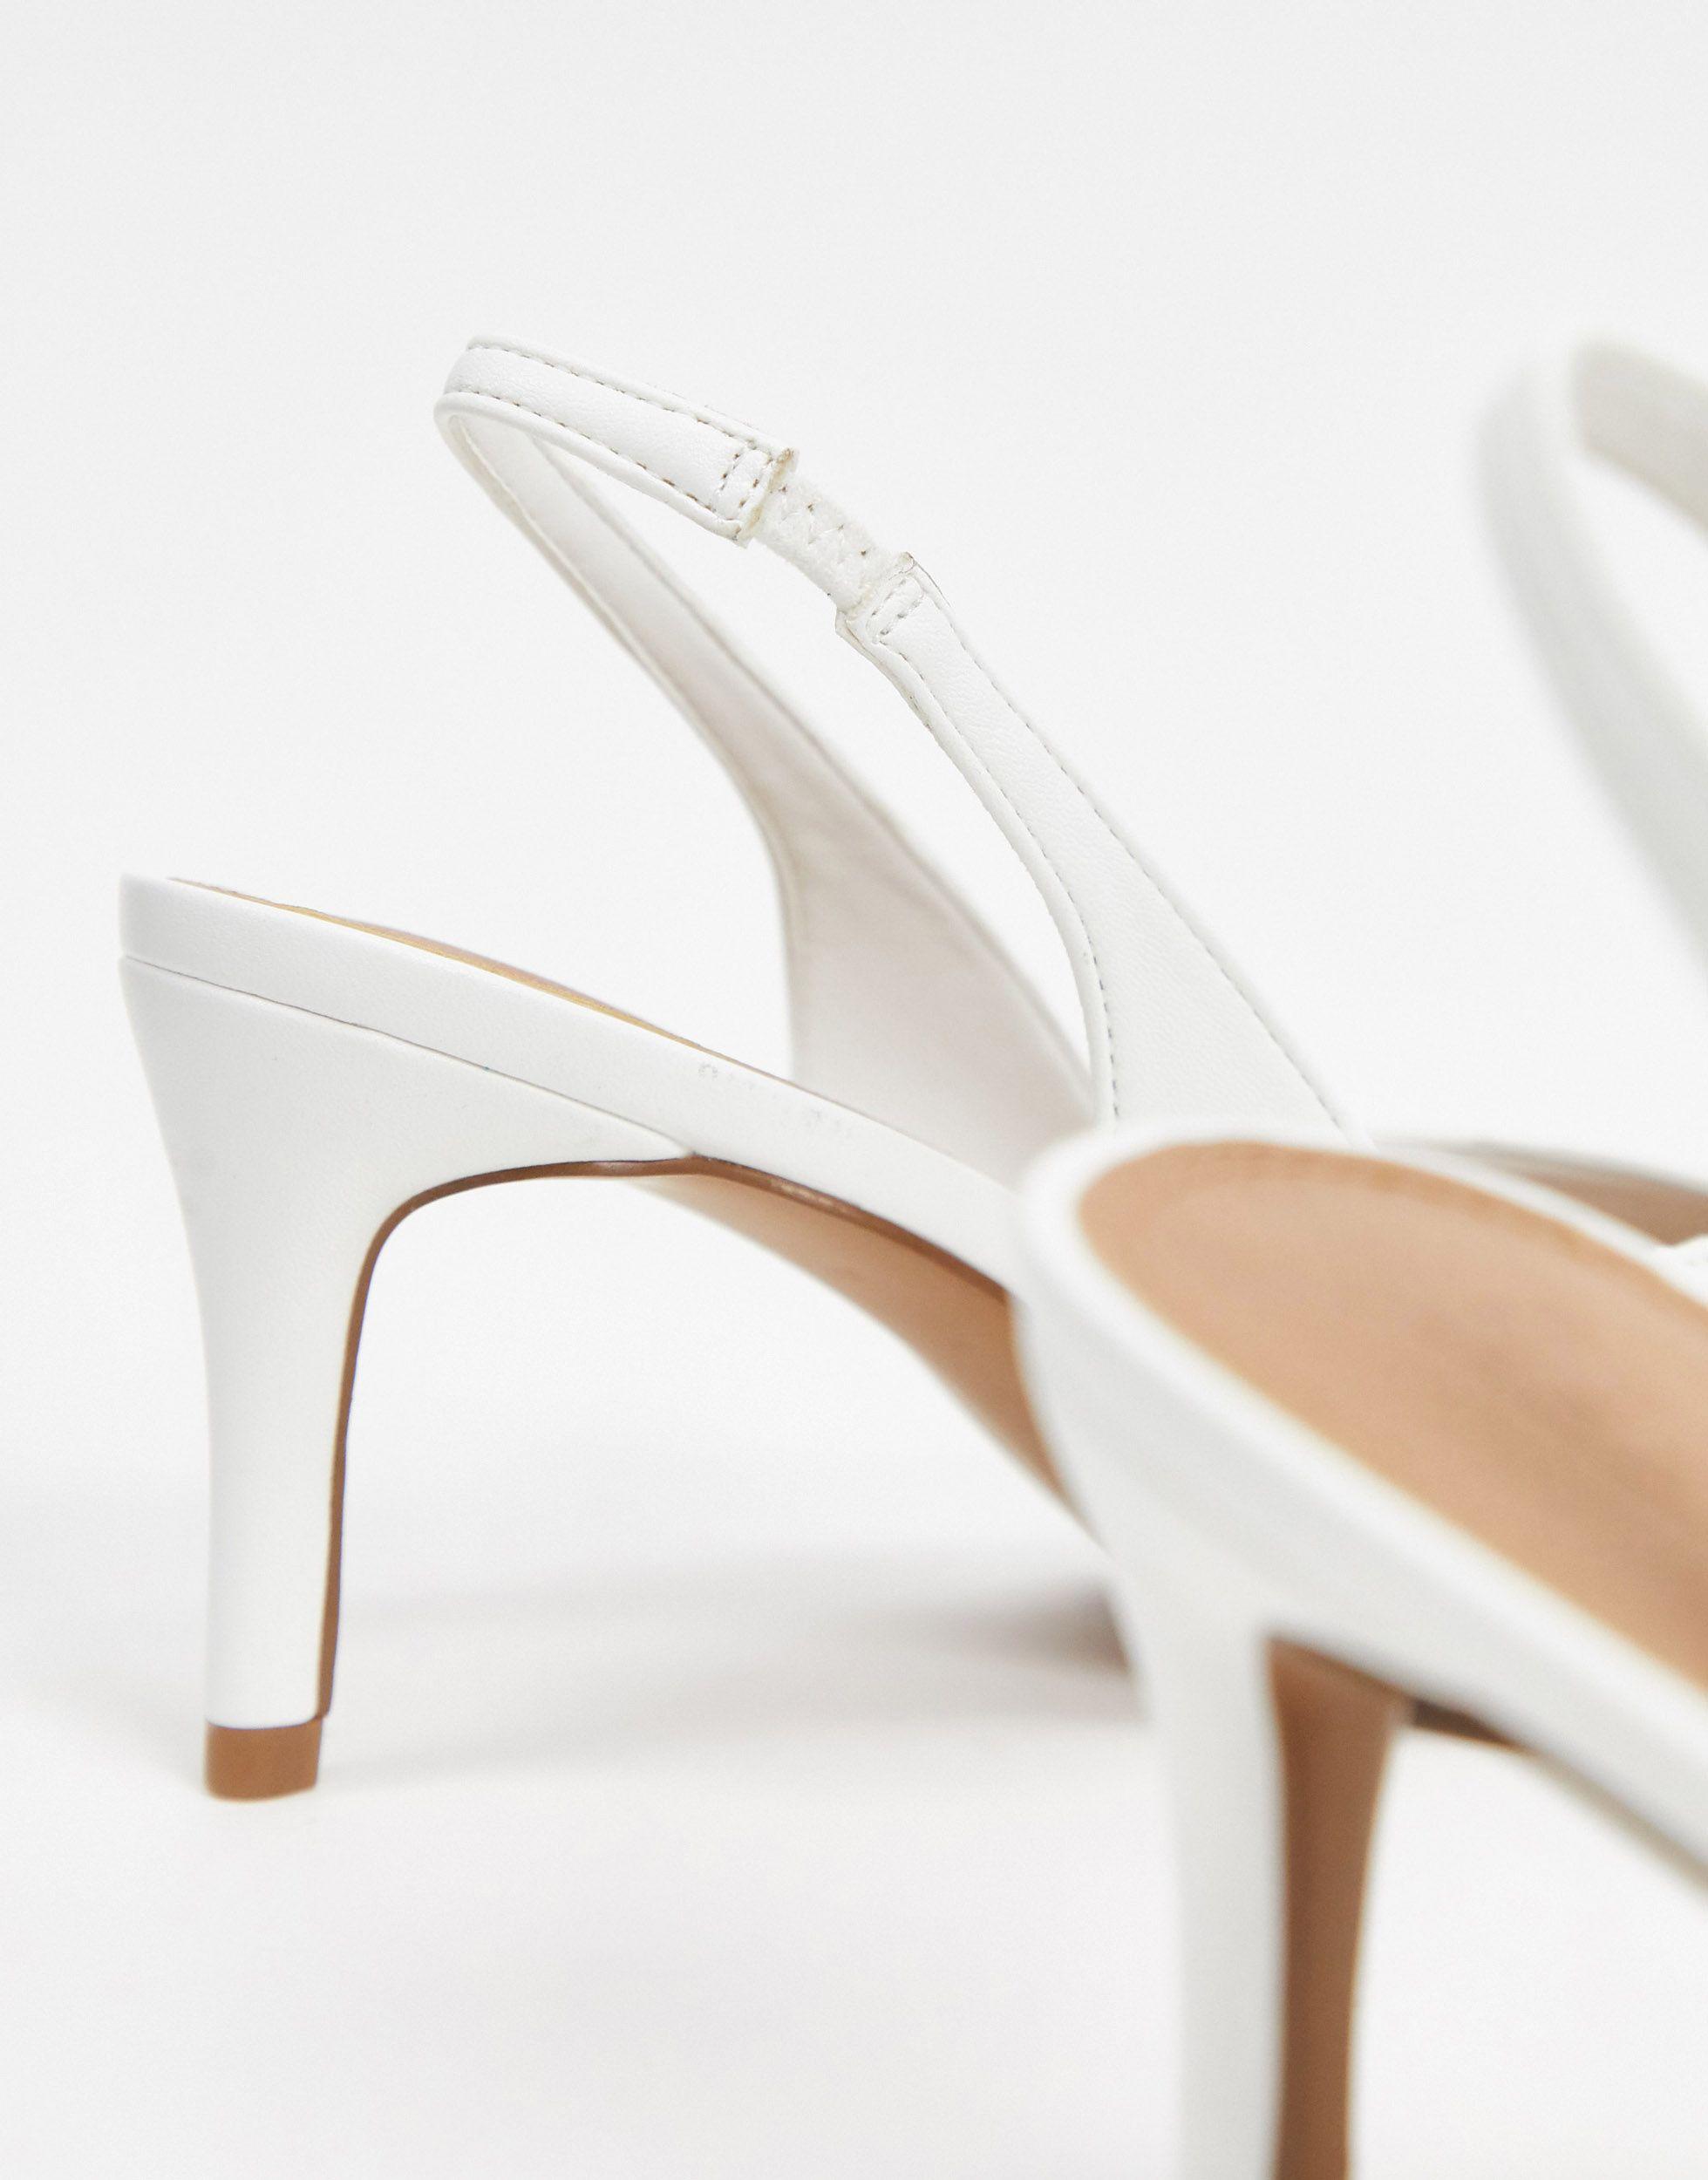 Zara High-Heel Slingback Shoes with Raised Details in Ecru White | Fashion  high heels, Slingback shoes, Womens fashion shoes